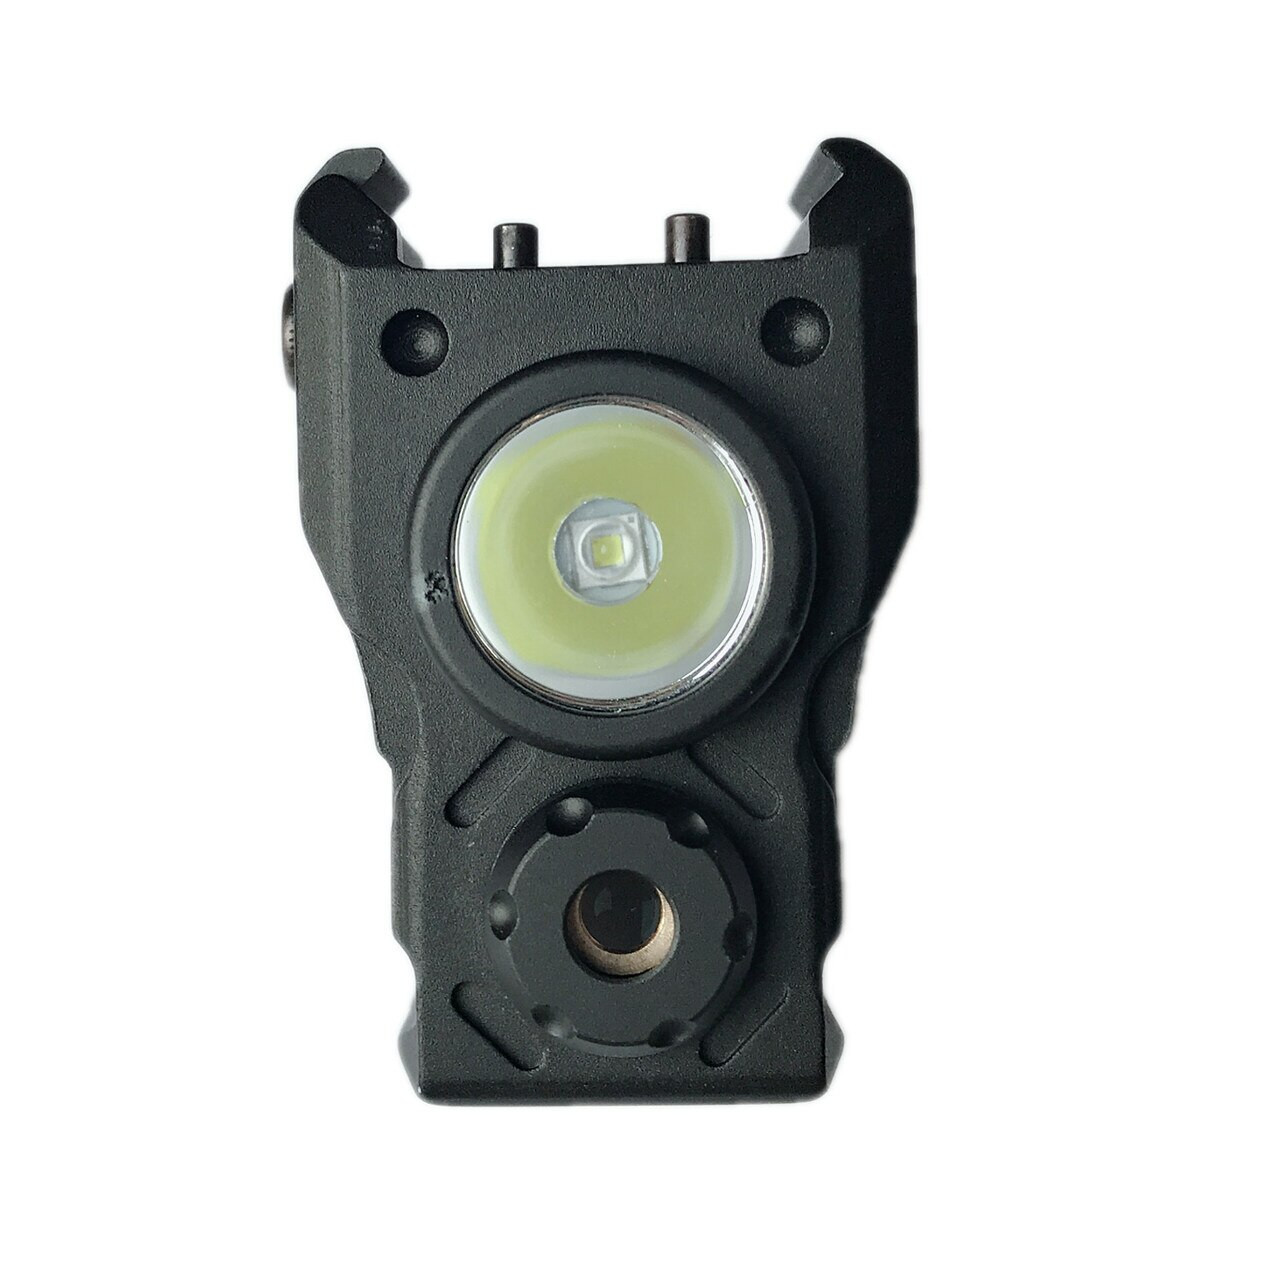 Ade Advanced Optics HG55 Strobe Laser Flashlight Combo Sight for Pistol Handgun, Green